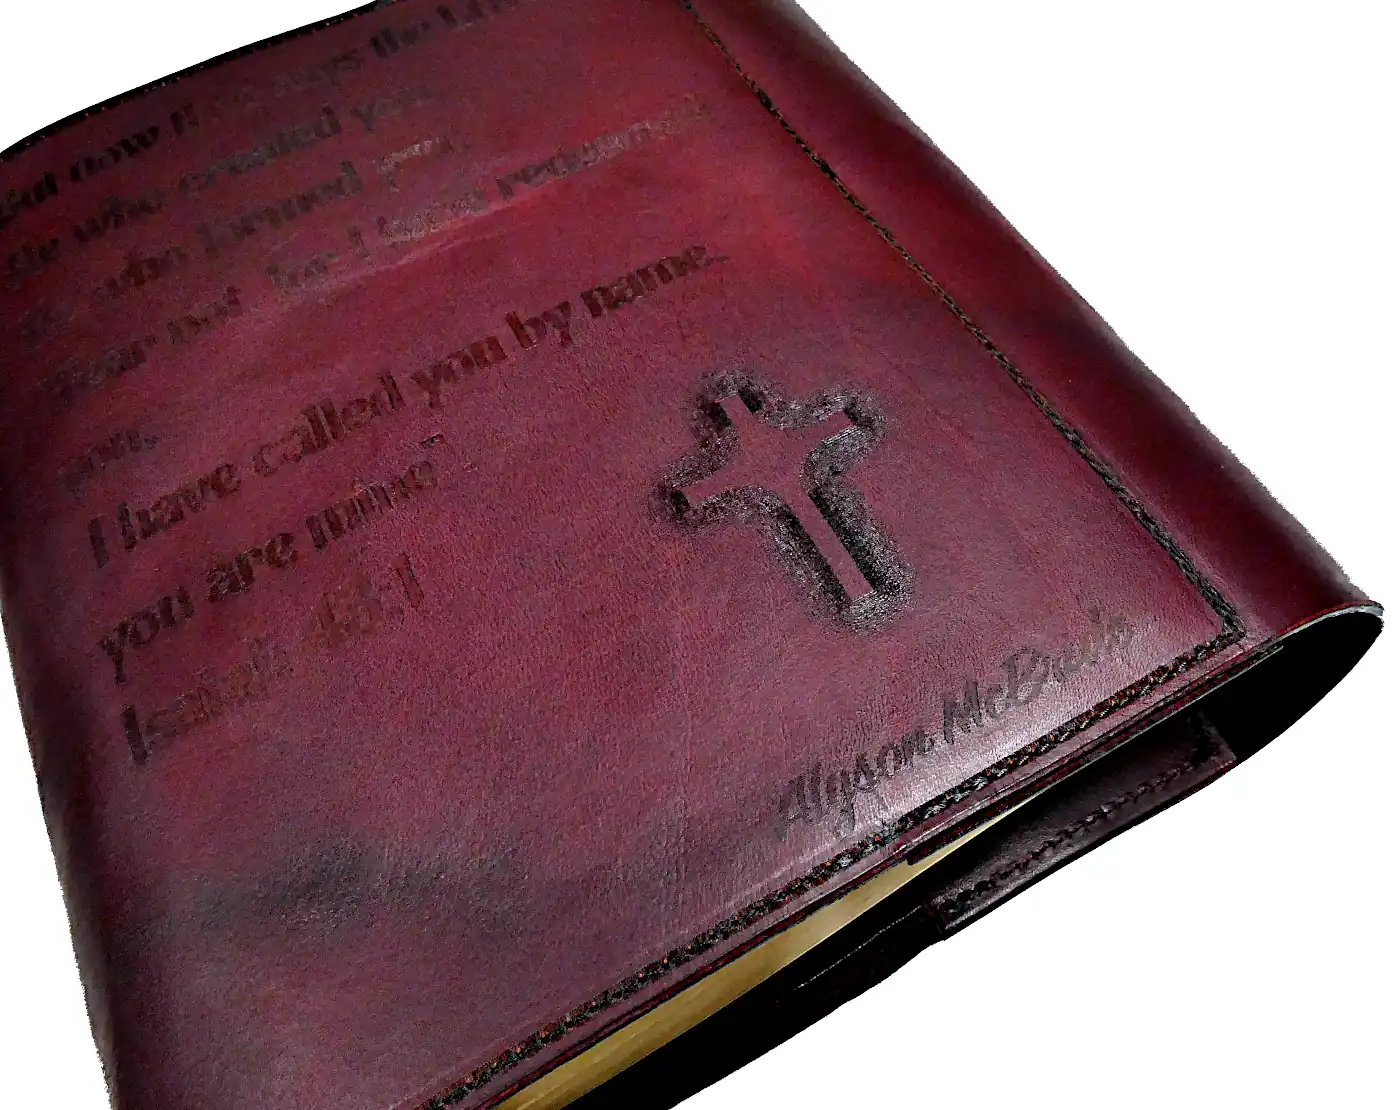 purple cross bible covers